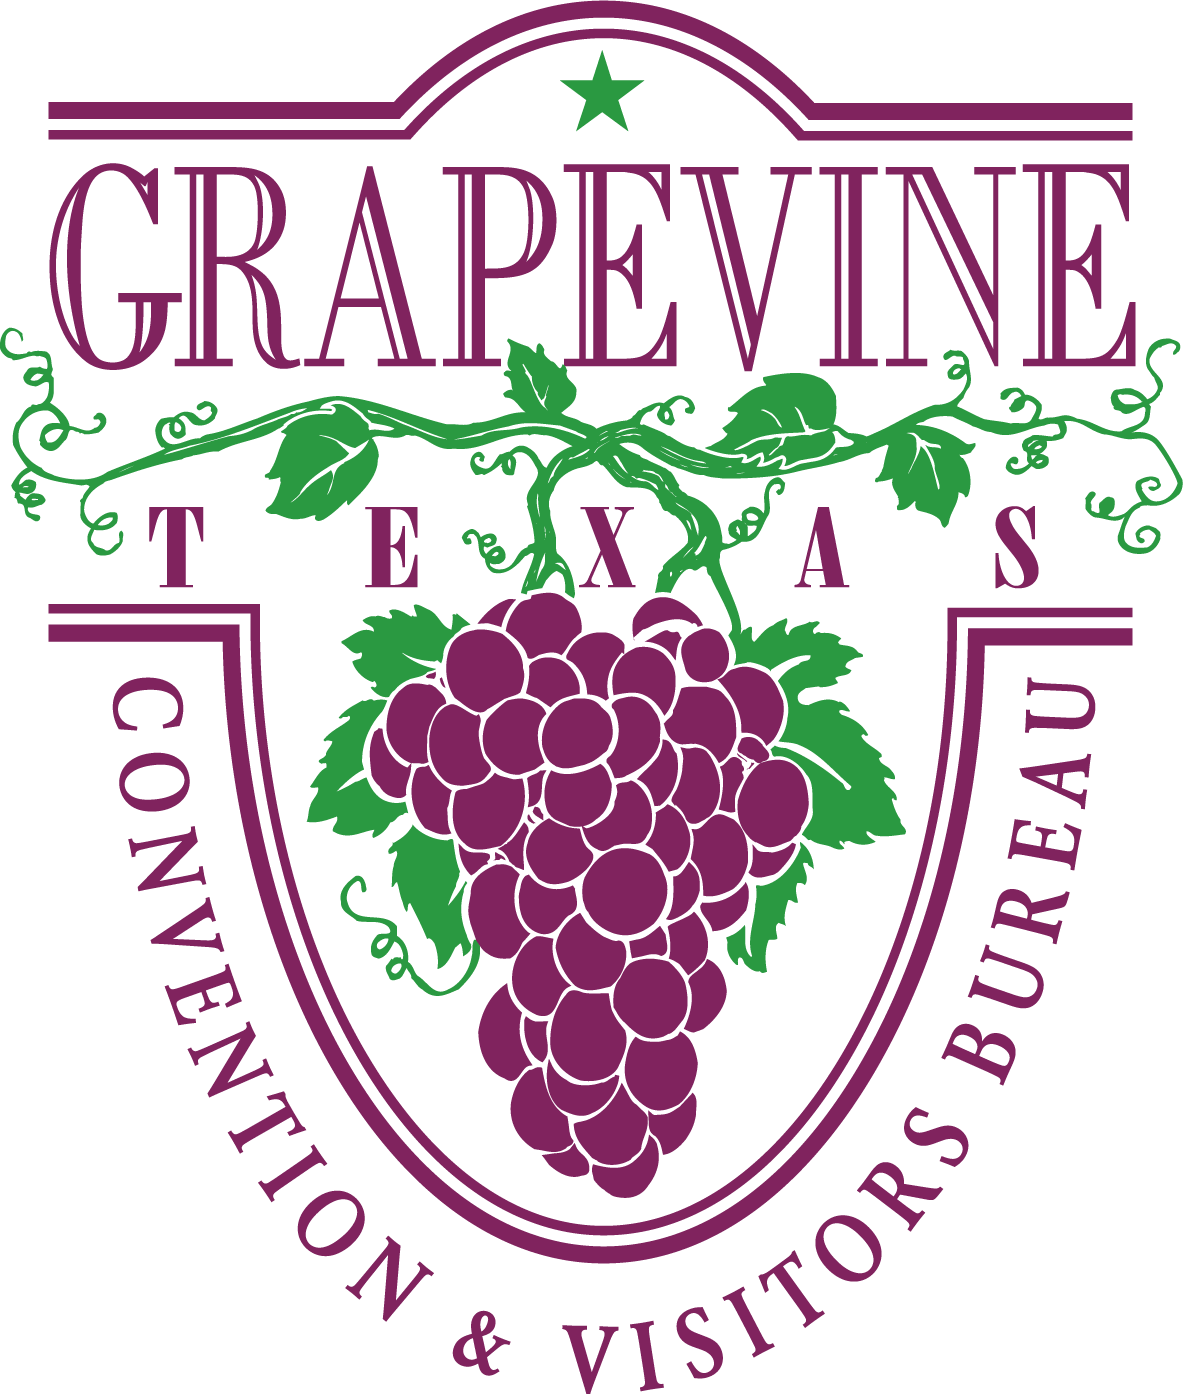 Grapevine CVB